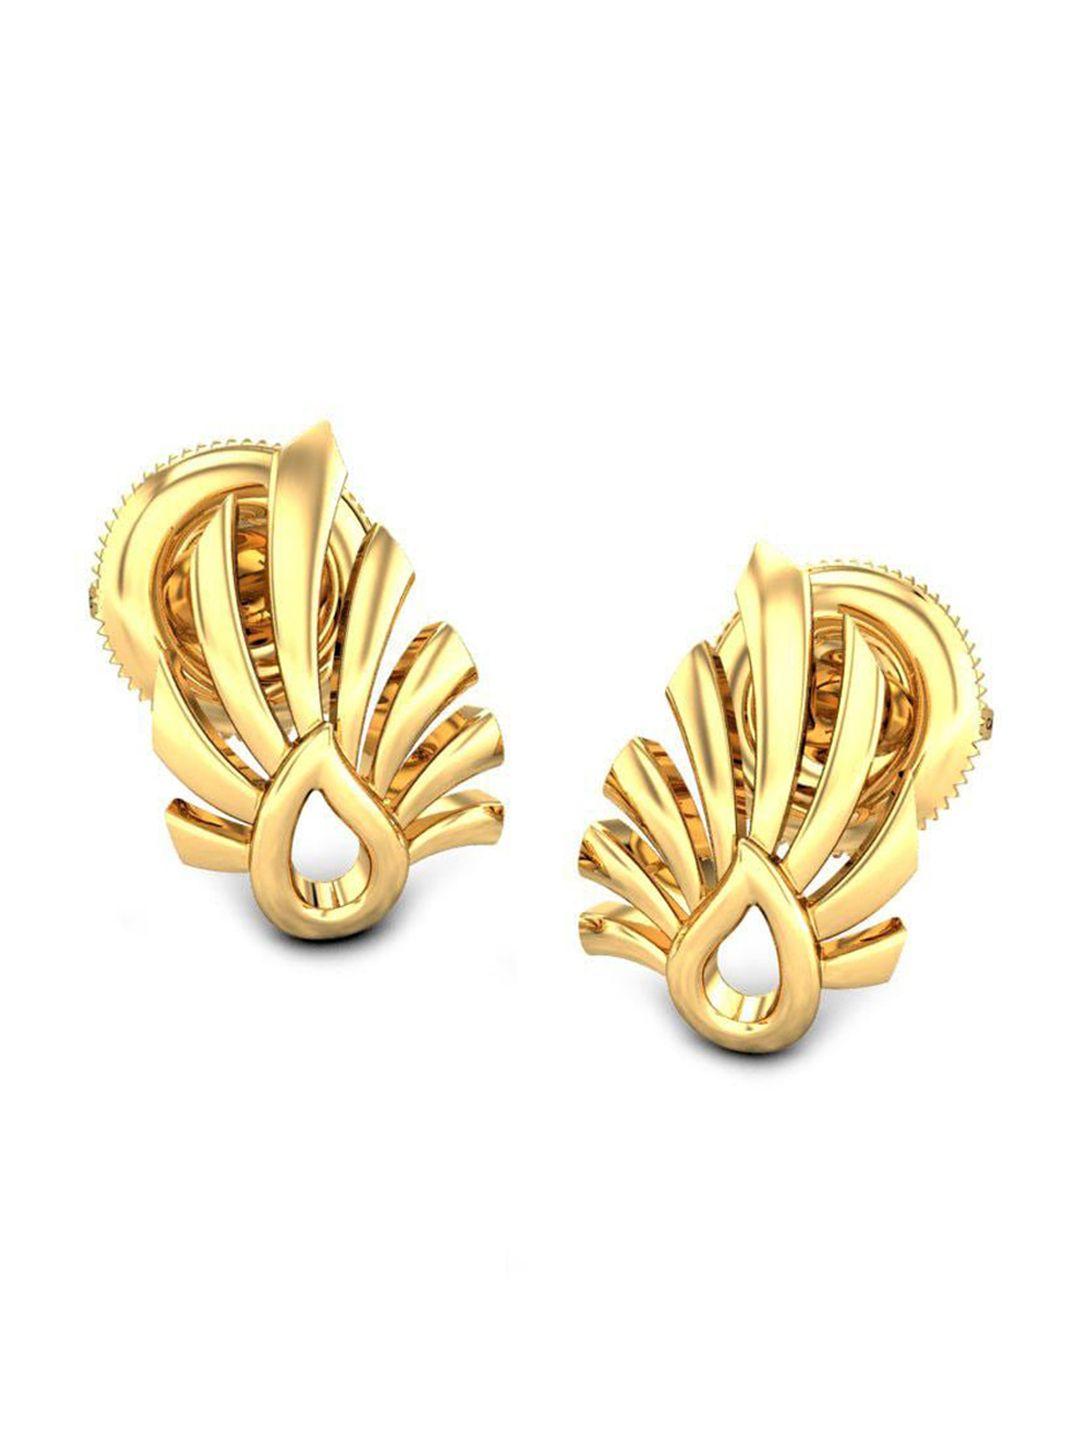 candere a kalyan jewellers company 18kt gold stud earrings-1.56gm